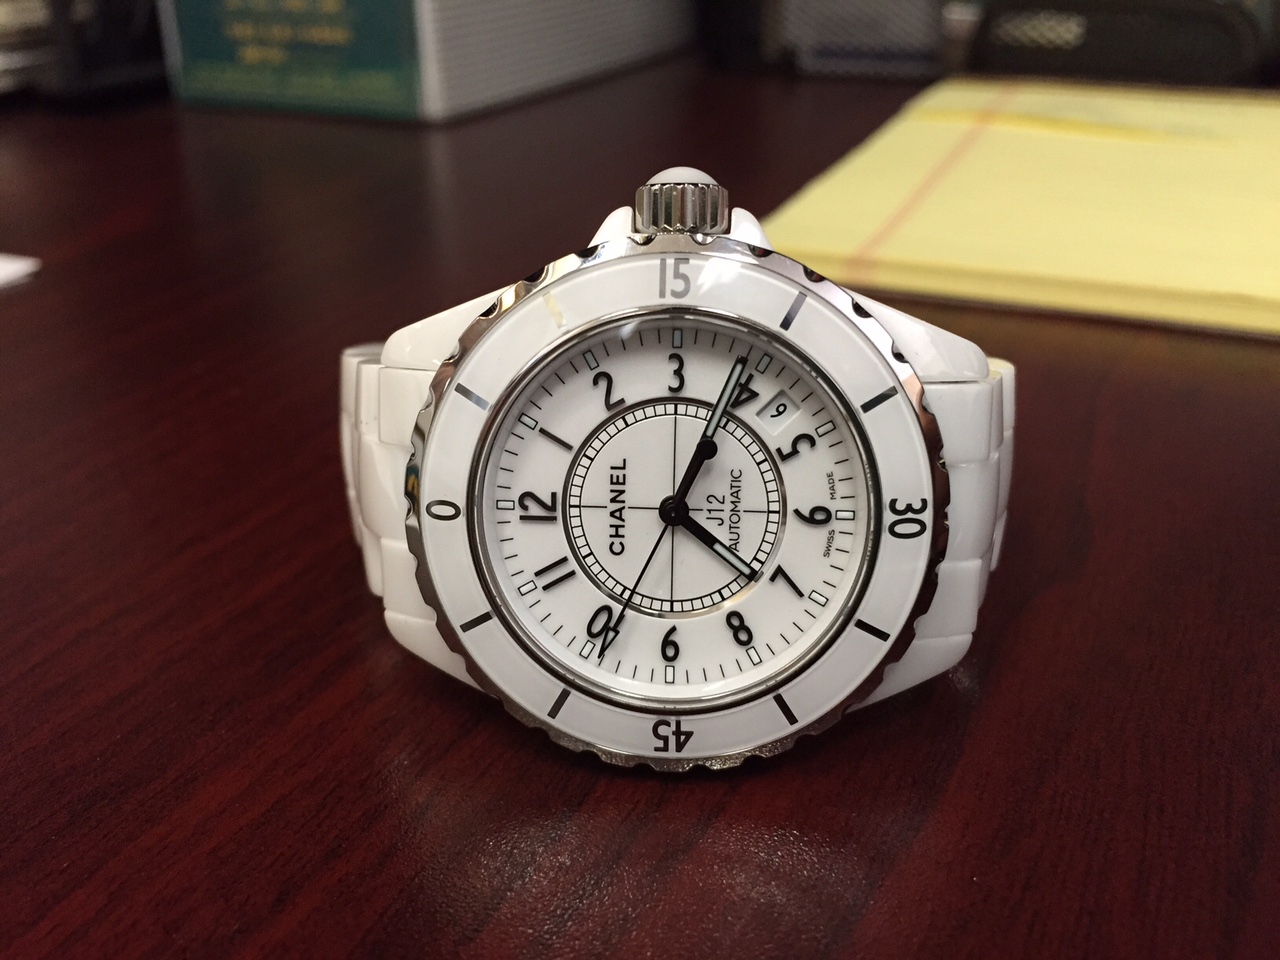 Chanel J12 Ceramic Watch - $3,000